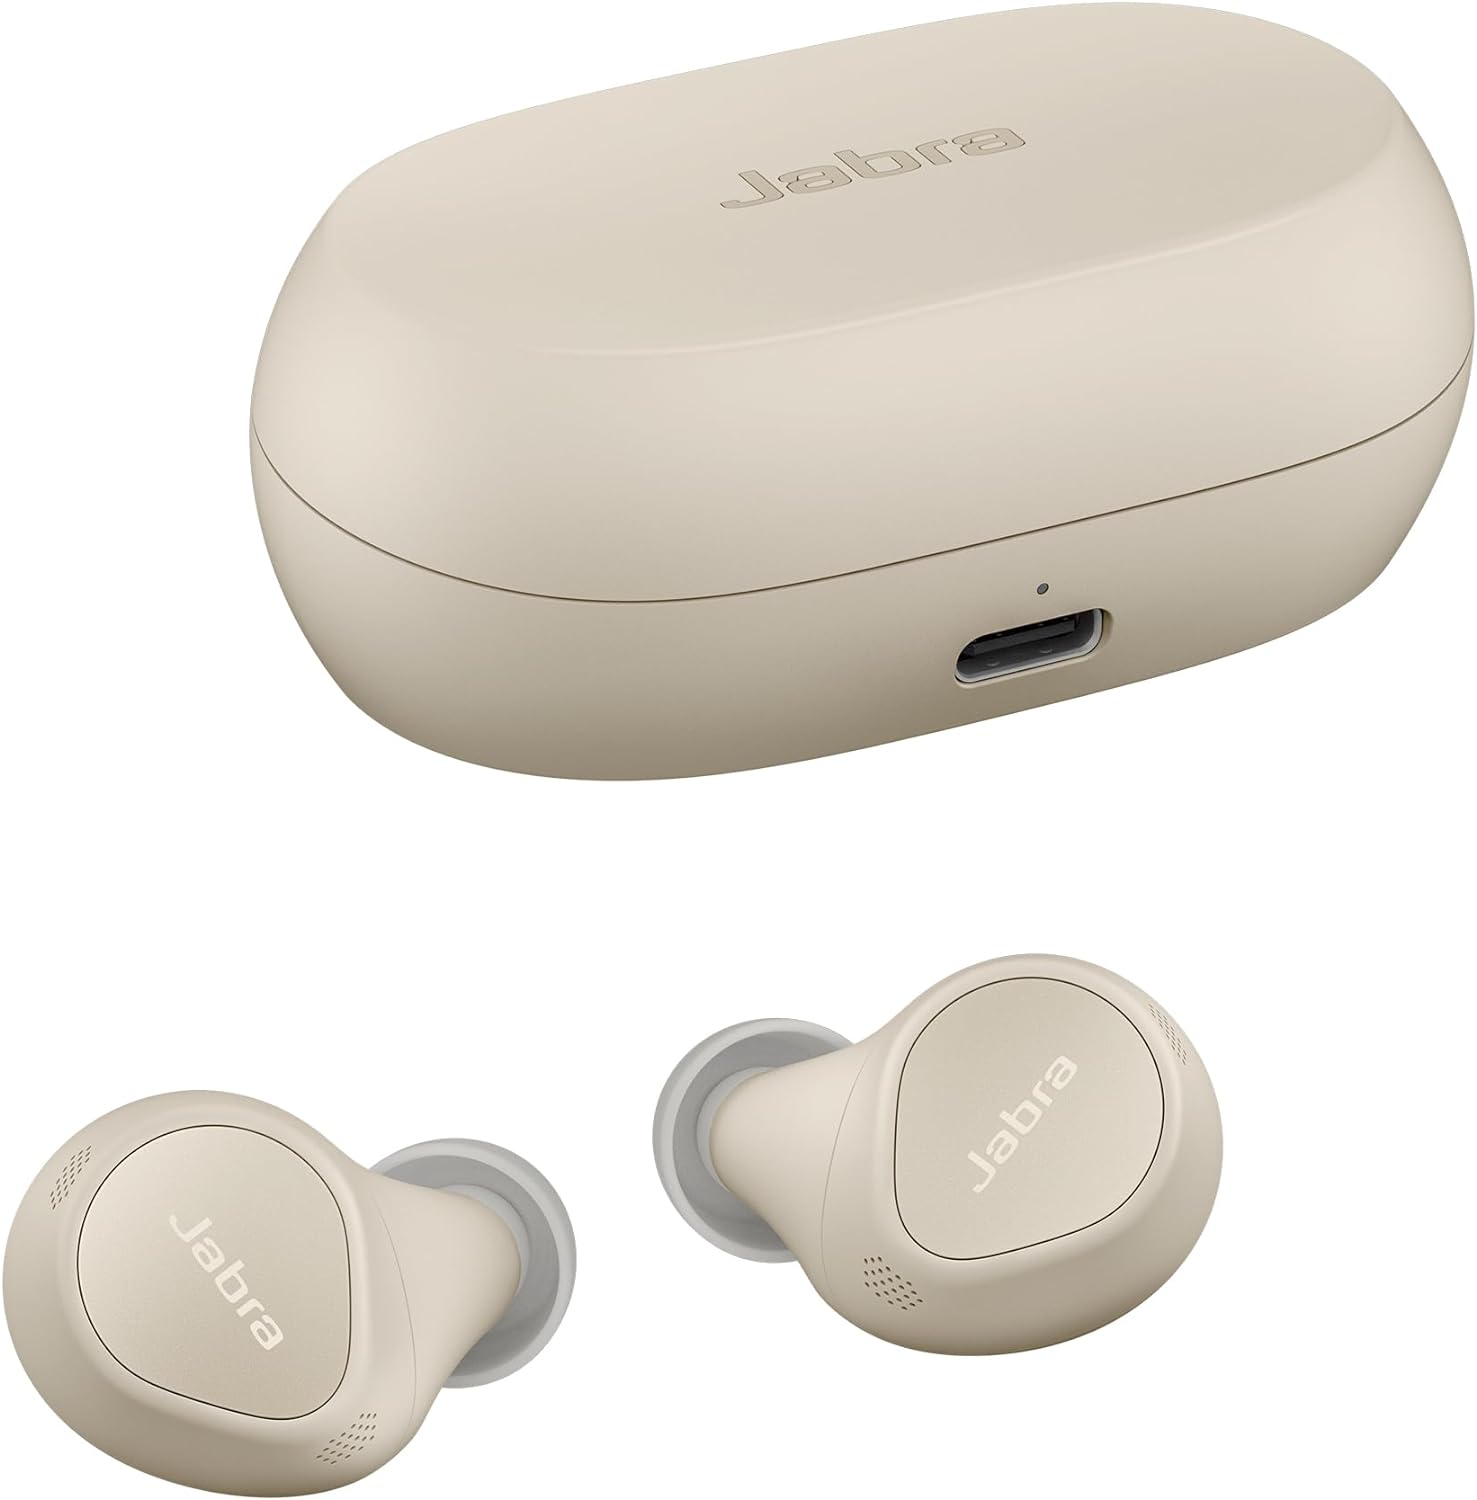 Jabra Elite 7 Active In-Ear Bluetooth Earbuds - Refurbished Excellent